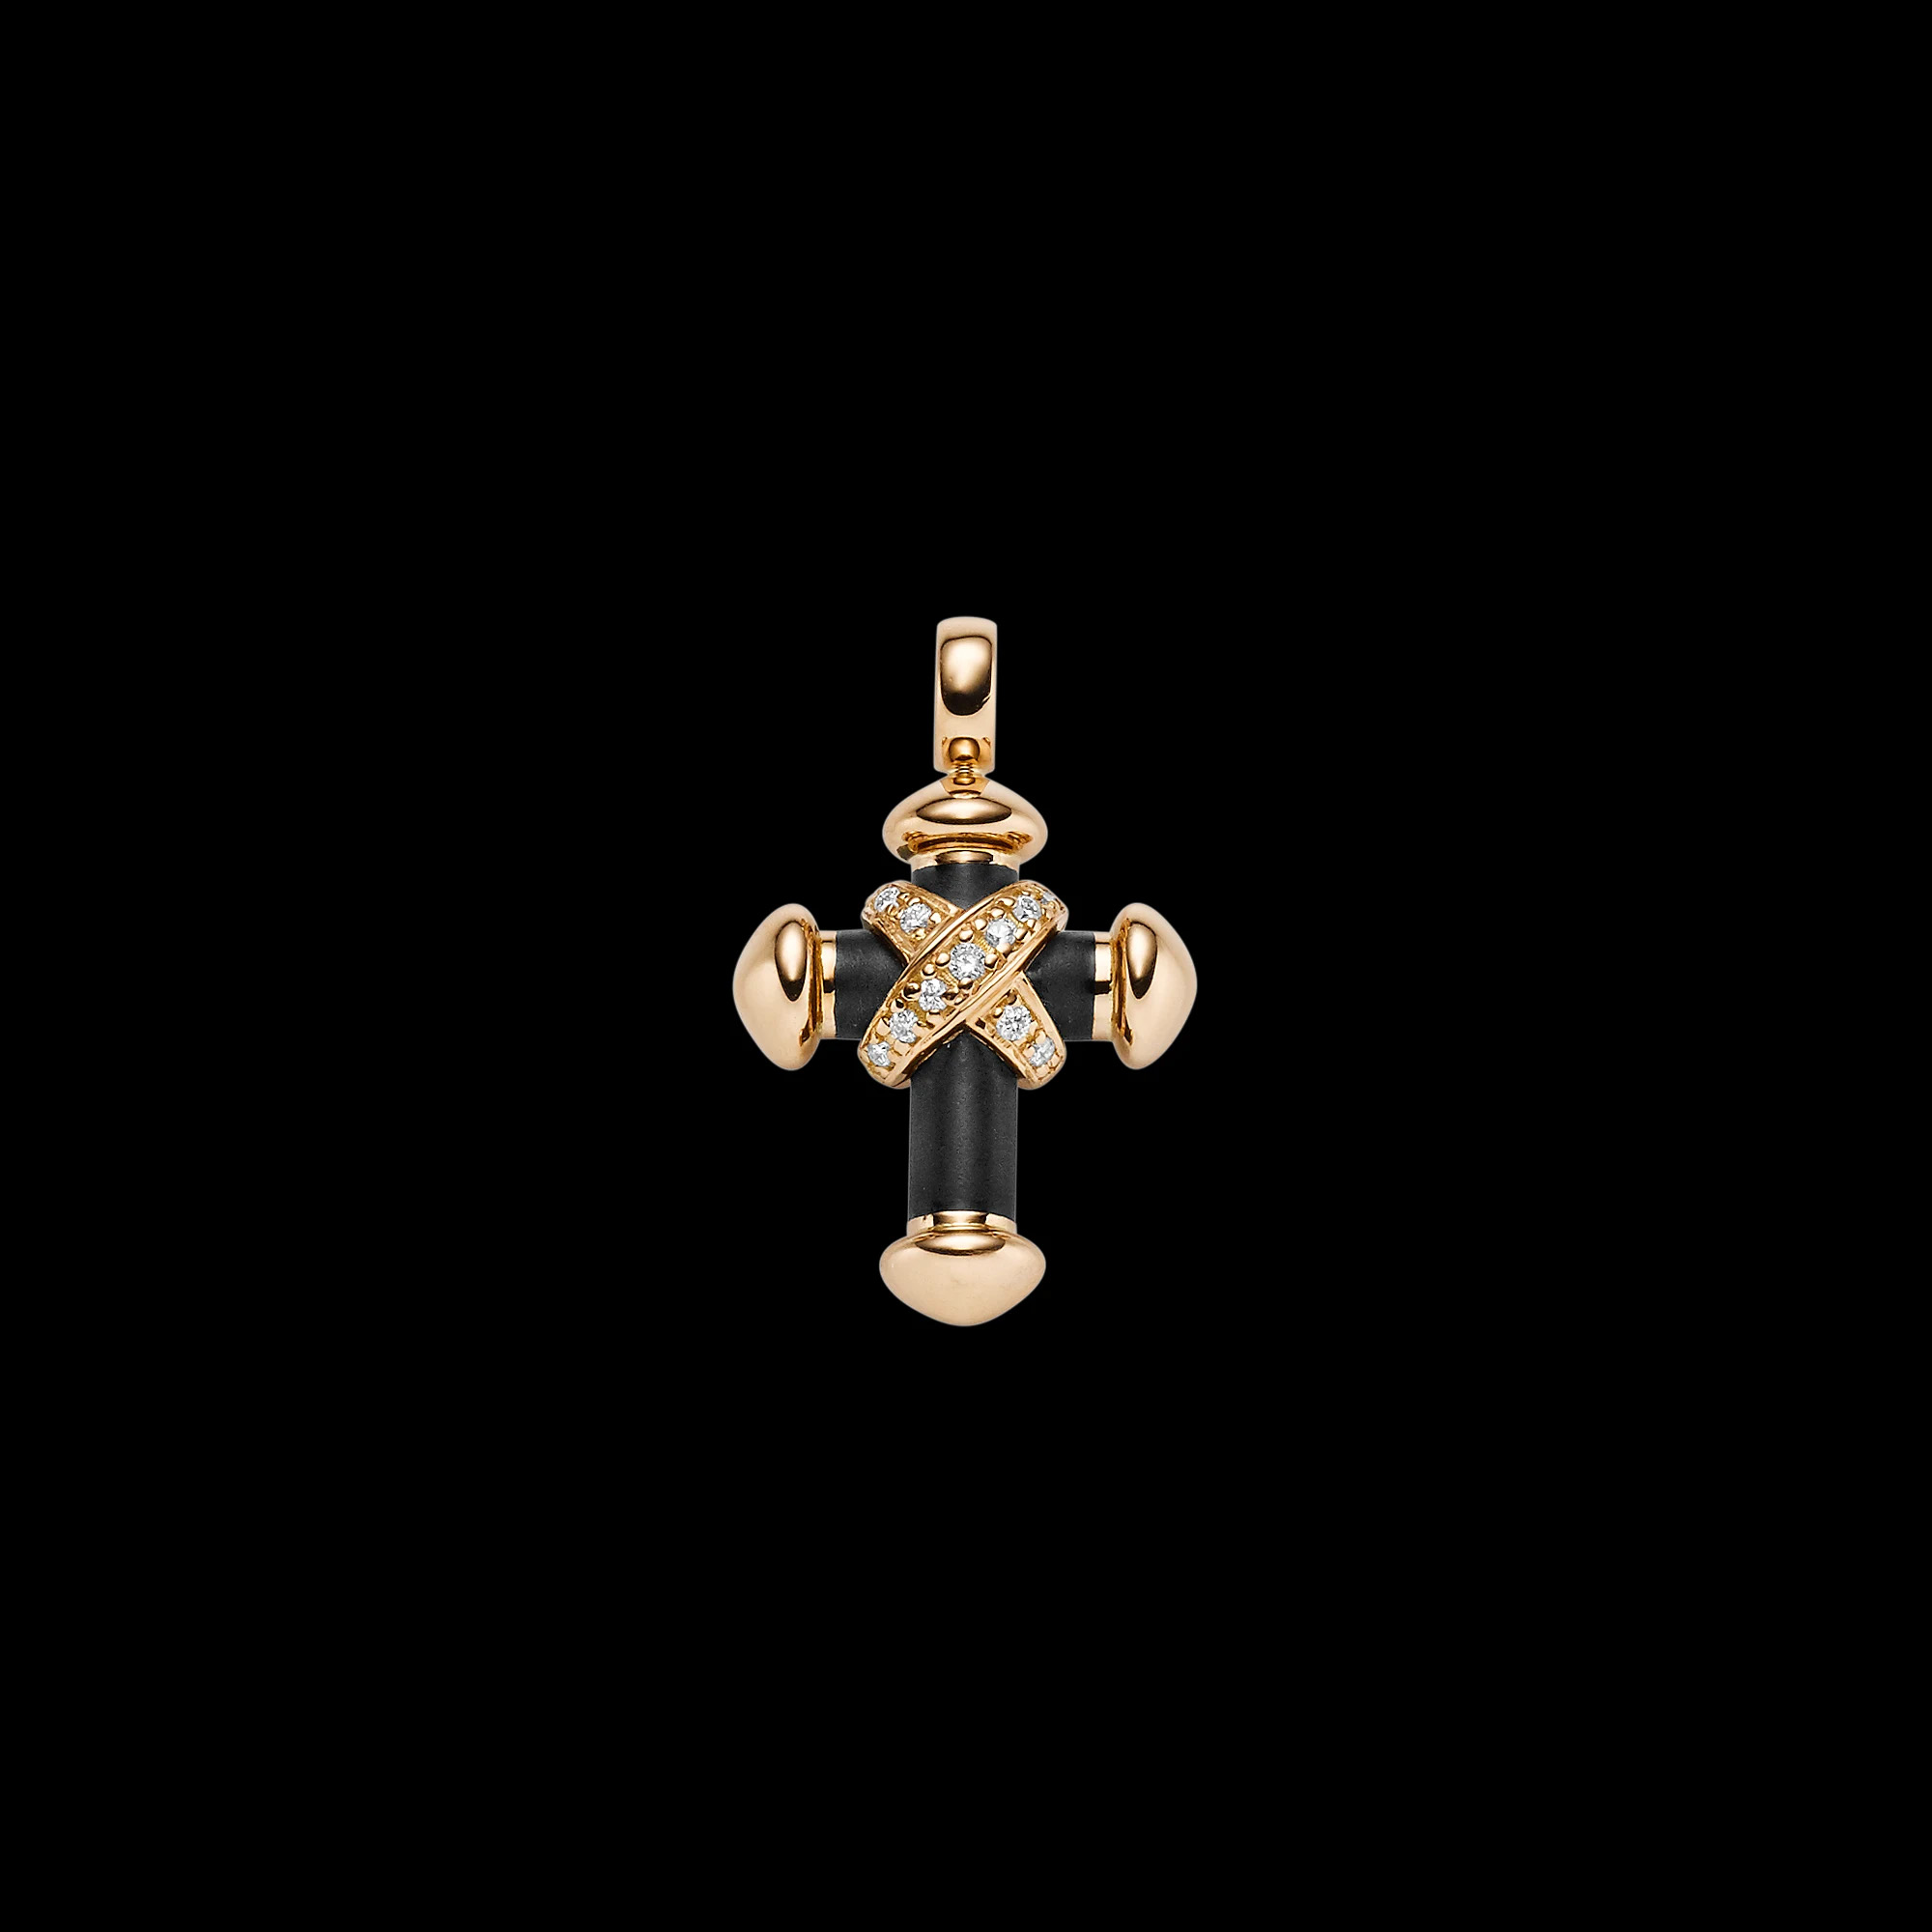 Wholesale custom OEM/ODM Jewelry gold plated jewelry OEM pendant manufacturer